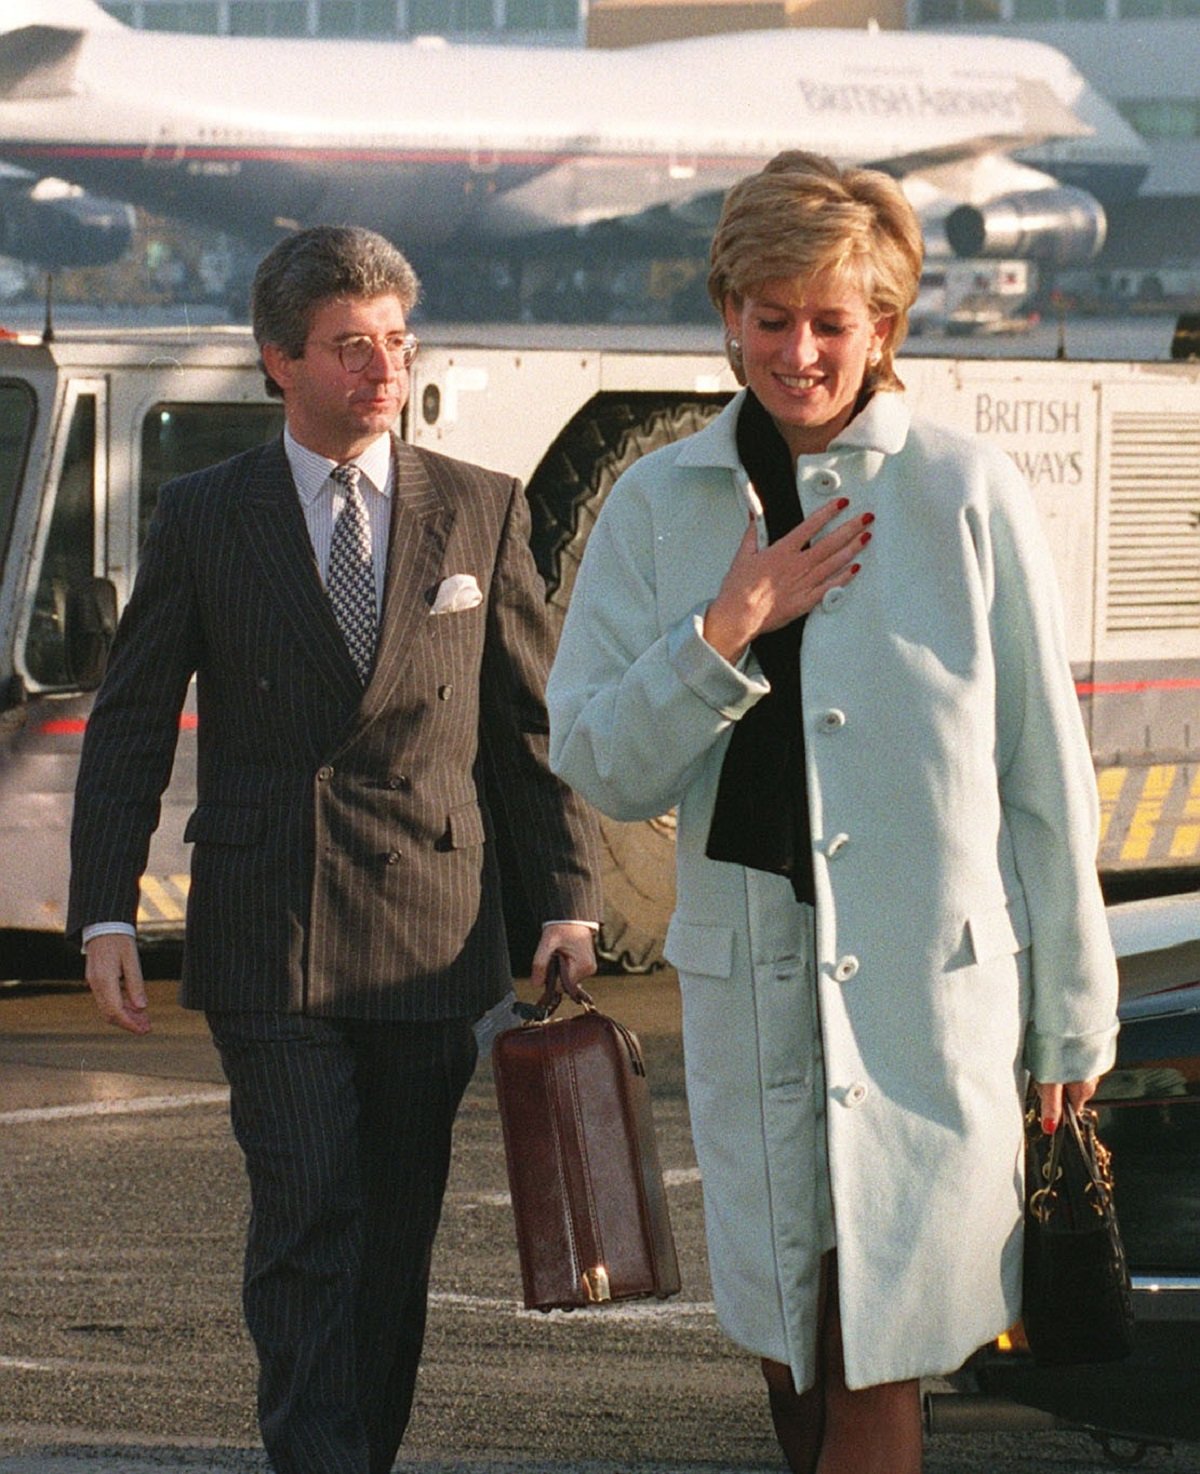 Princess Diana and her private secretary, Patrick Jephson, at Heathrow Airport